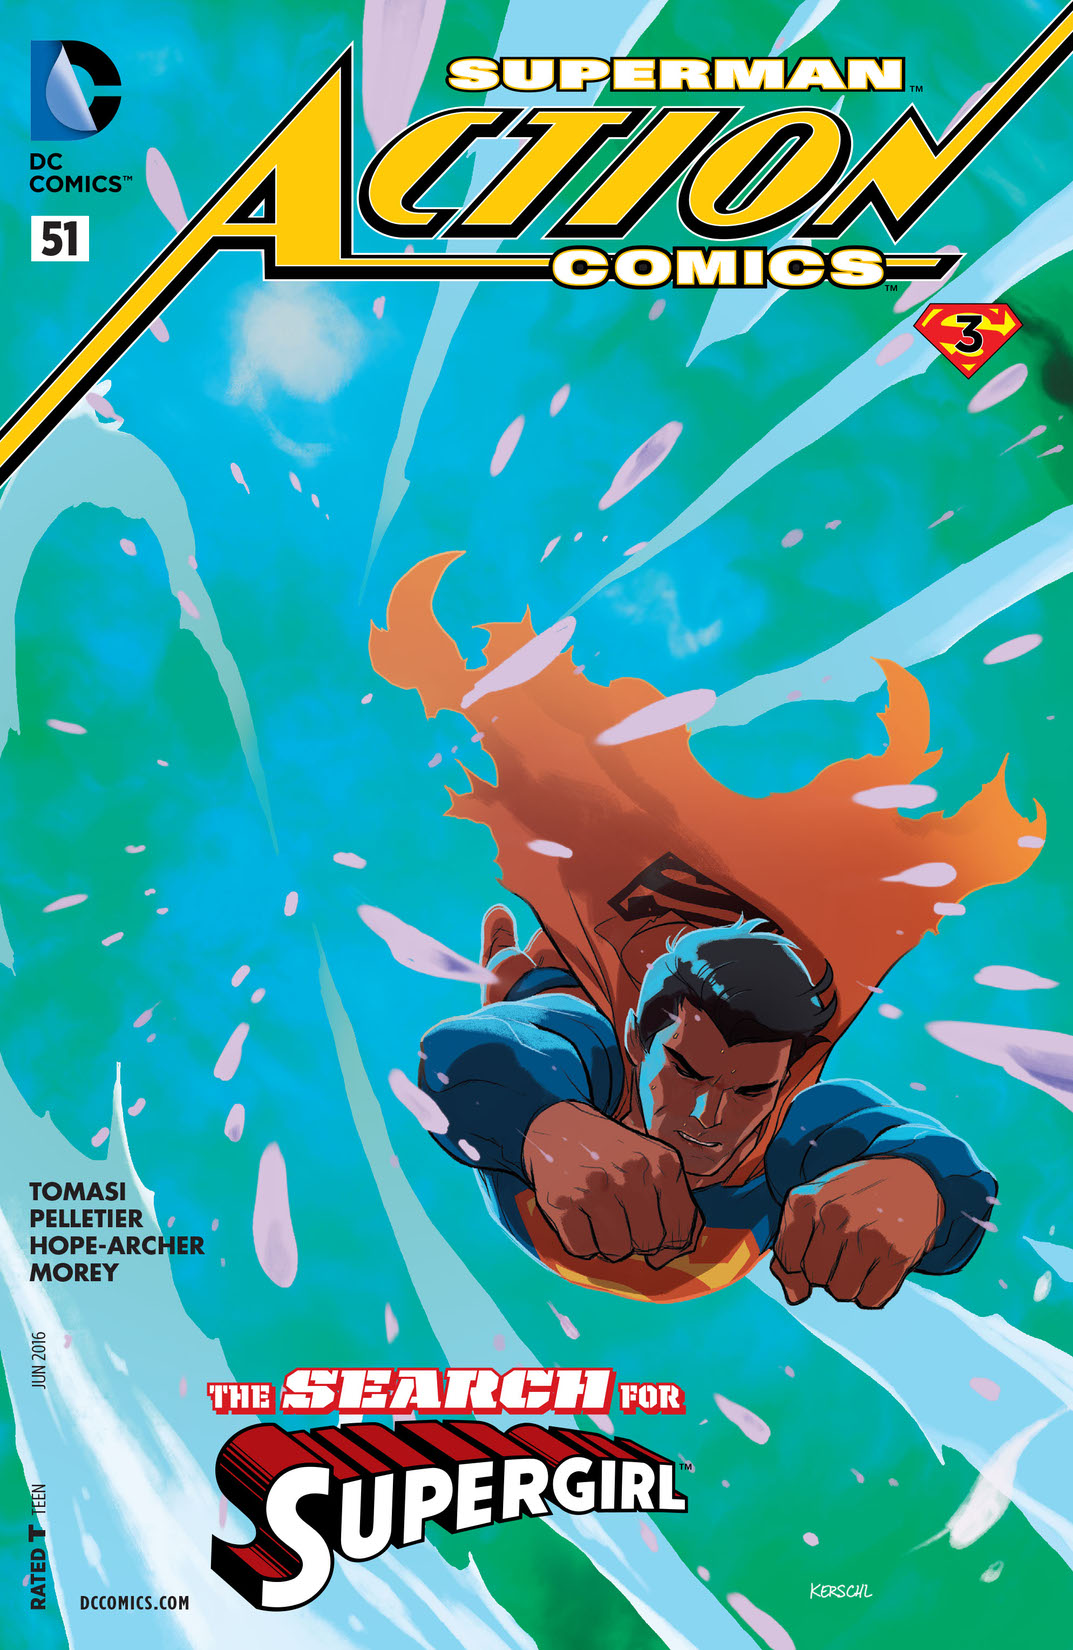 Action Comics (2011-) #51 preview images